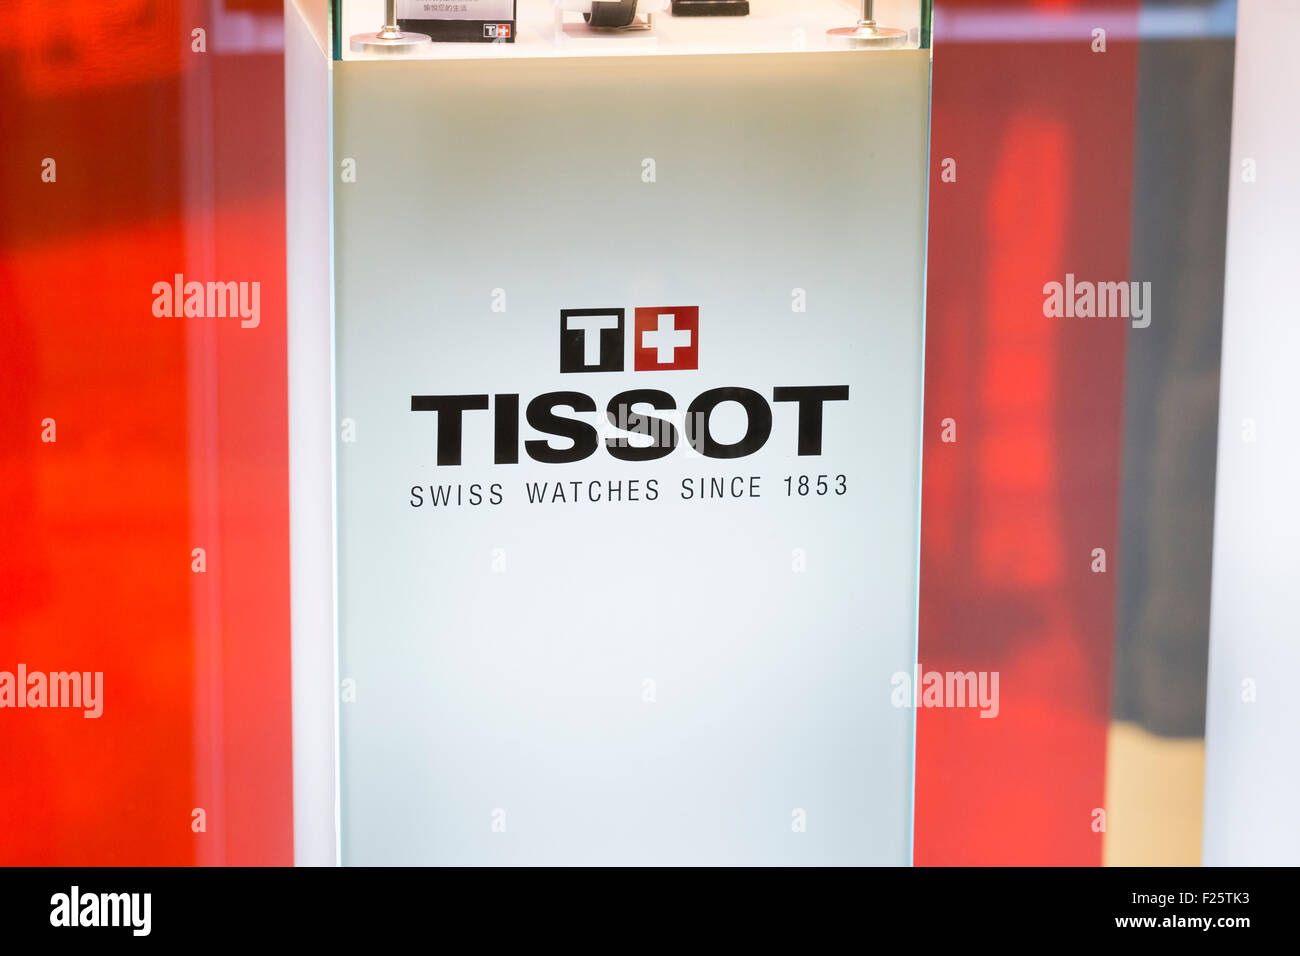 Tissot logo Stock Photo